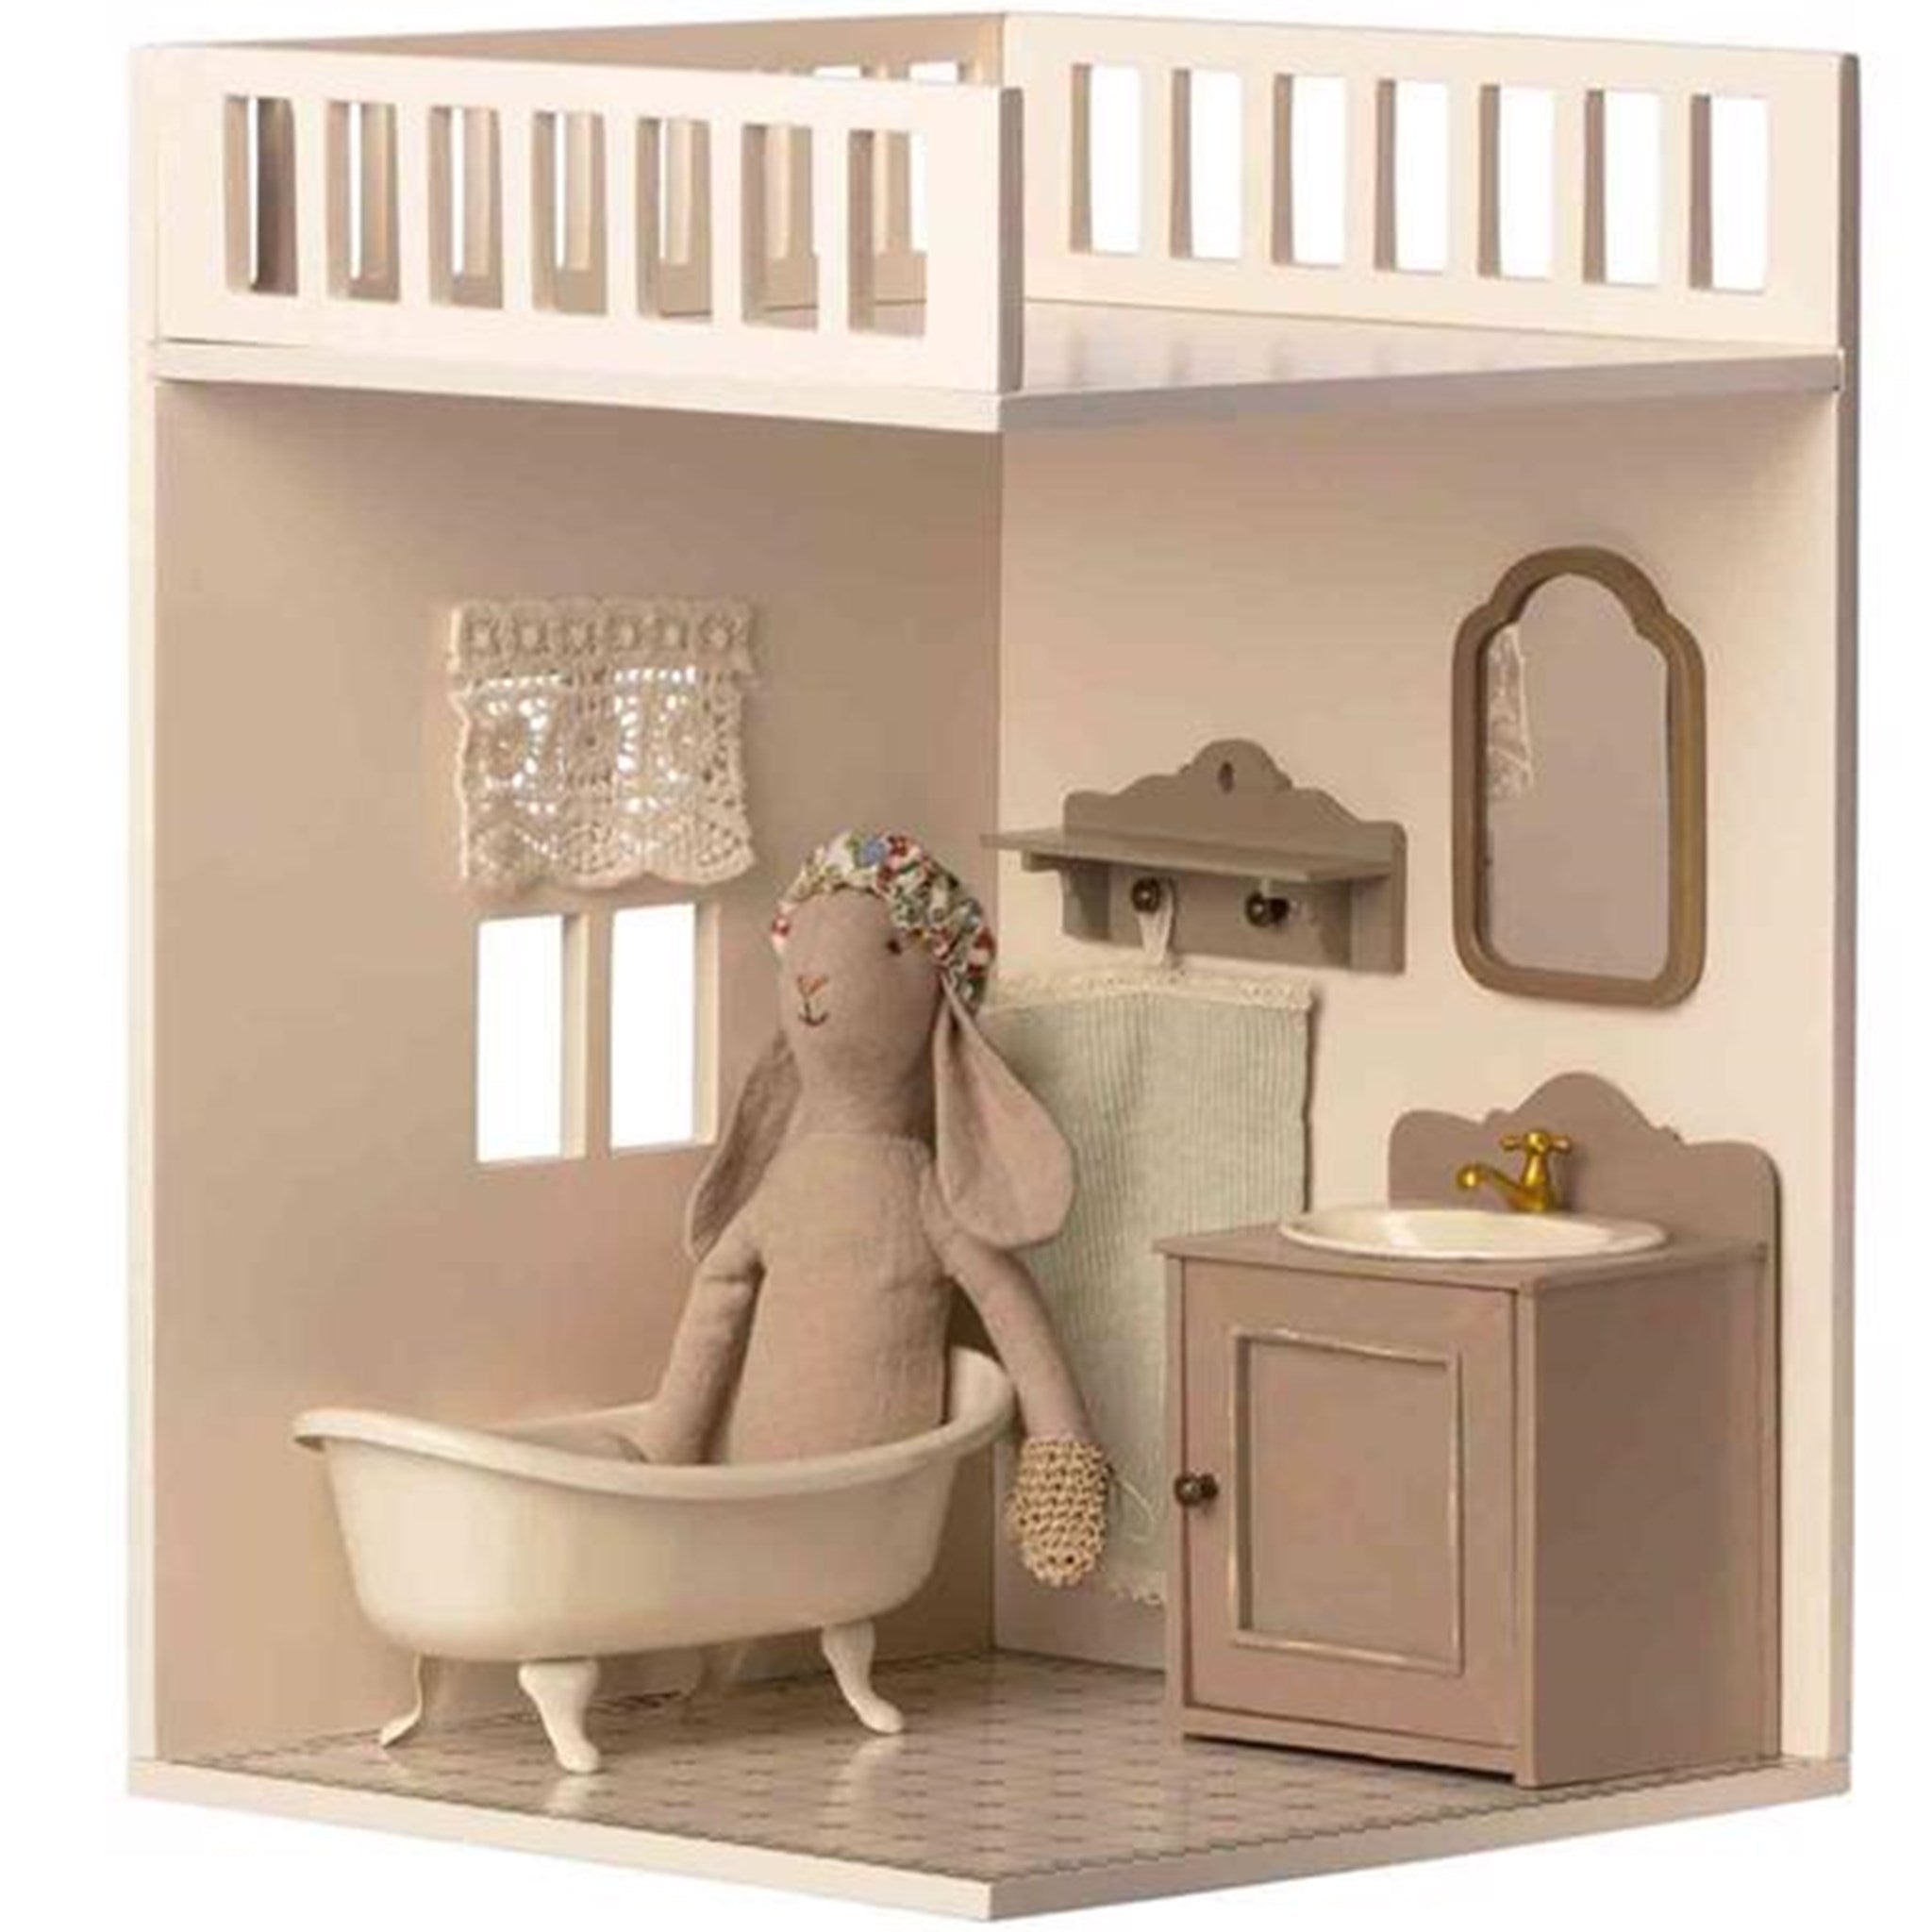 Maileg House of Miniature - Bath Room 2